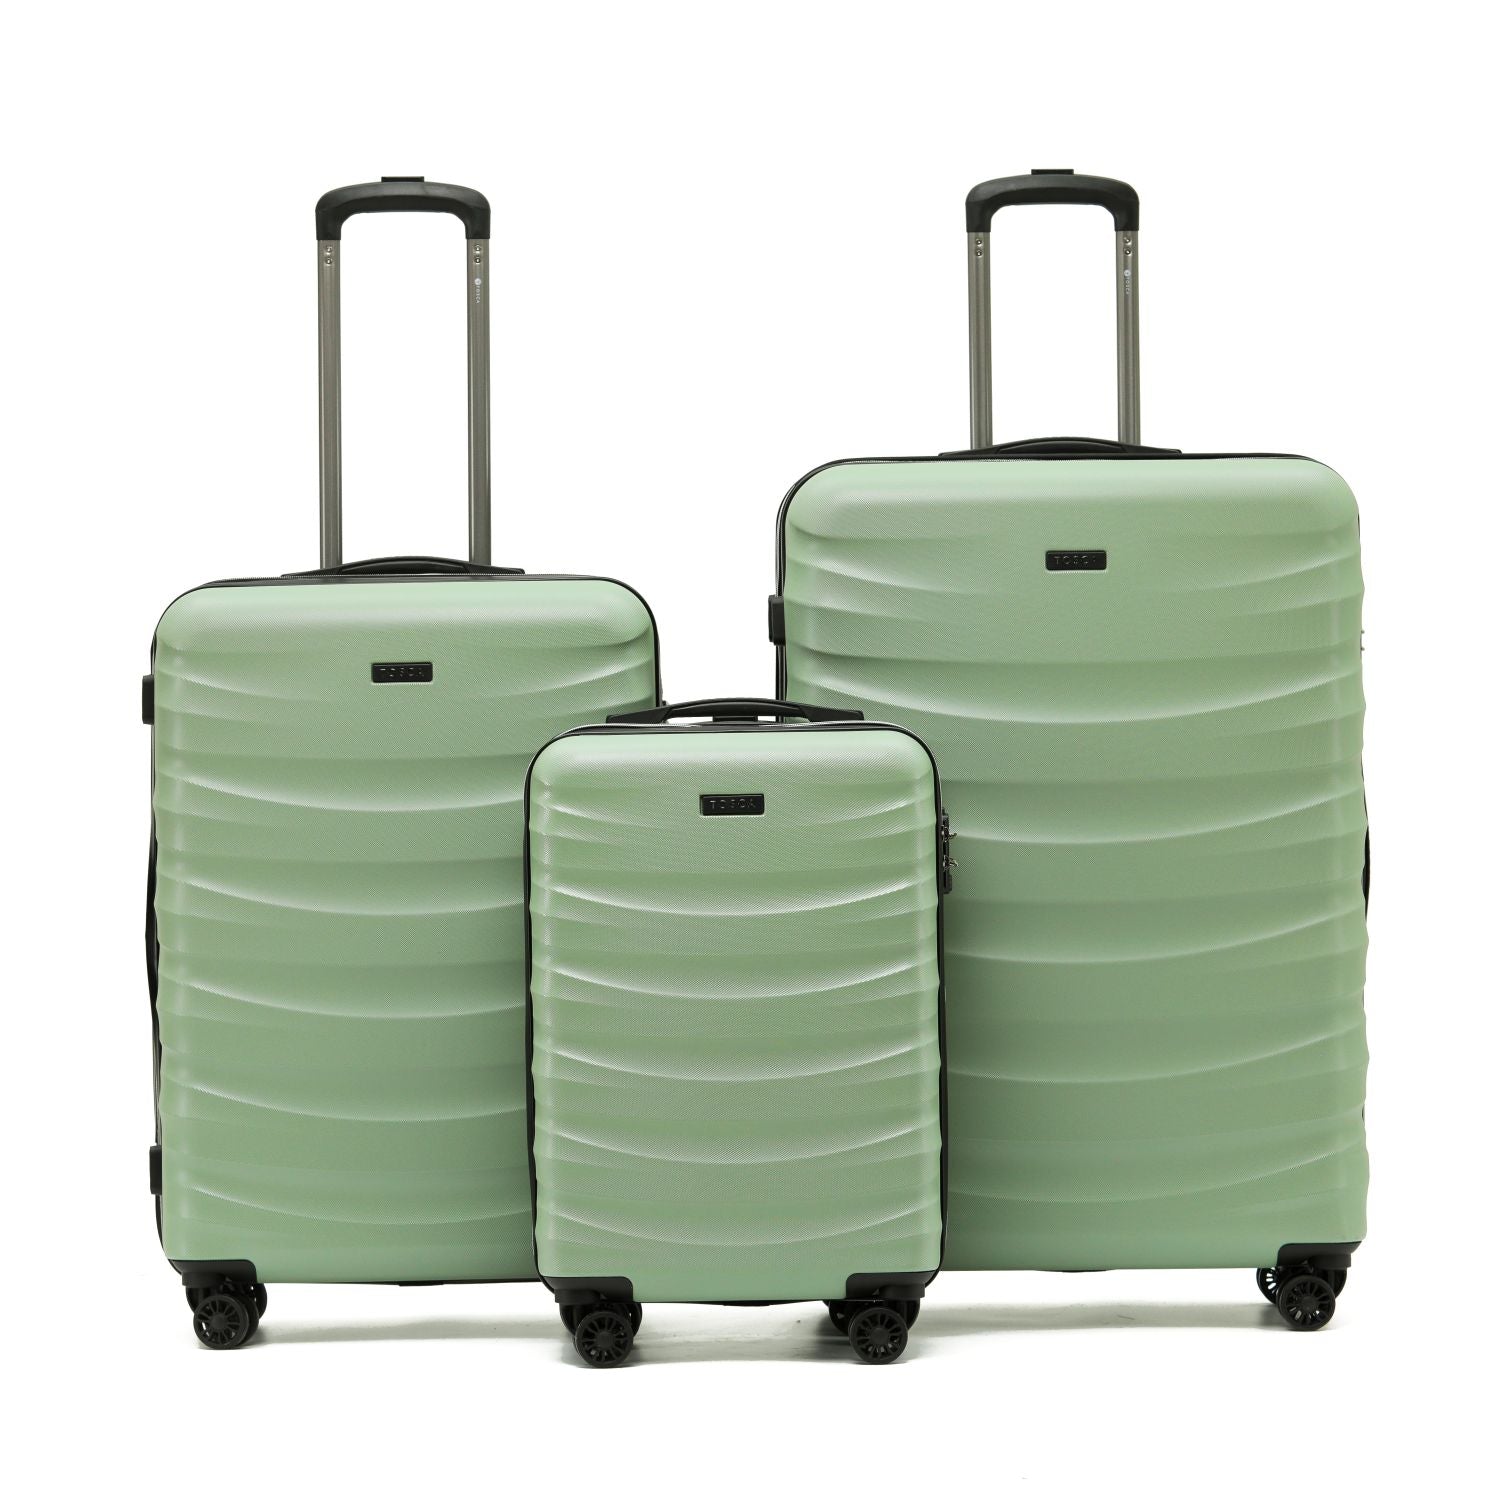 Tosca - Intersteller set of 3 suitcases - Oil Green - 0